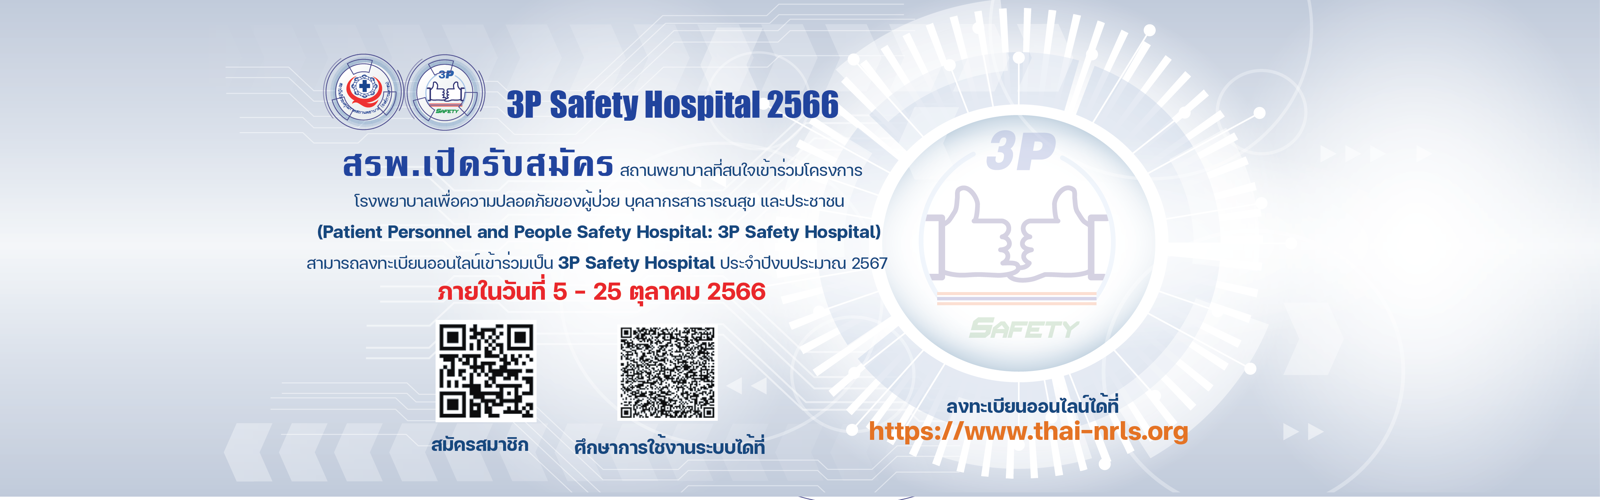 3P Safety Hospital 2566